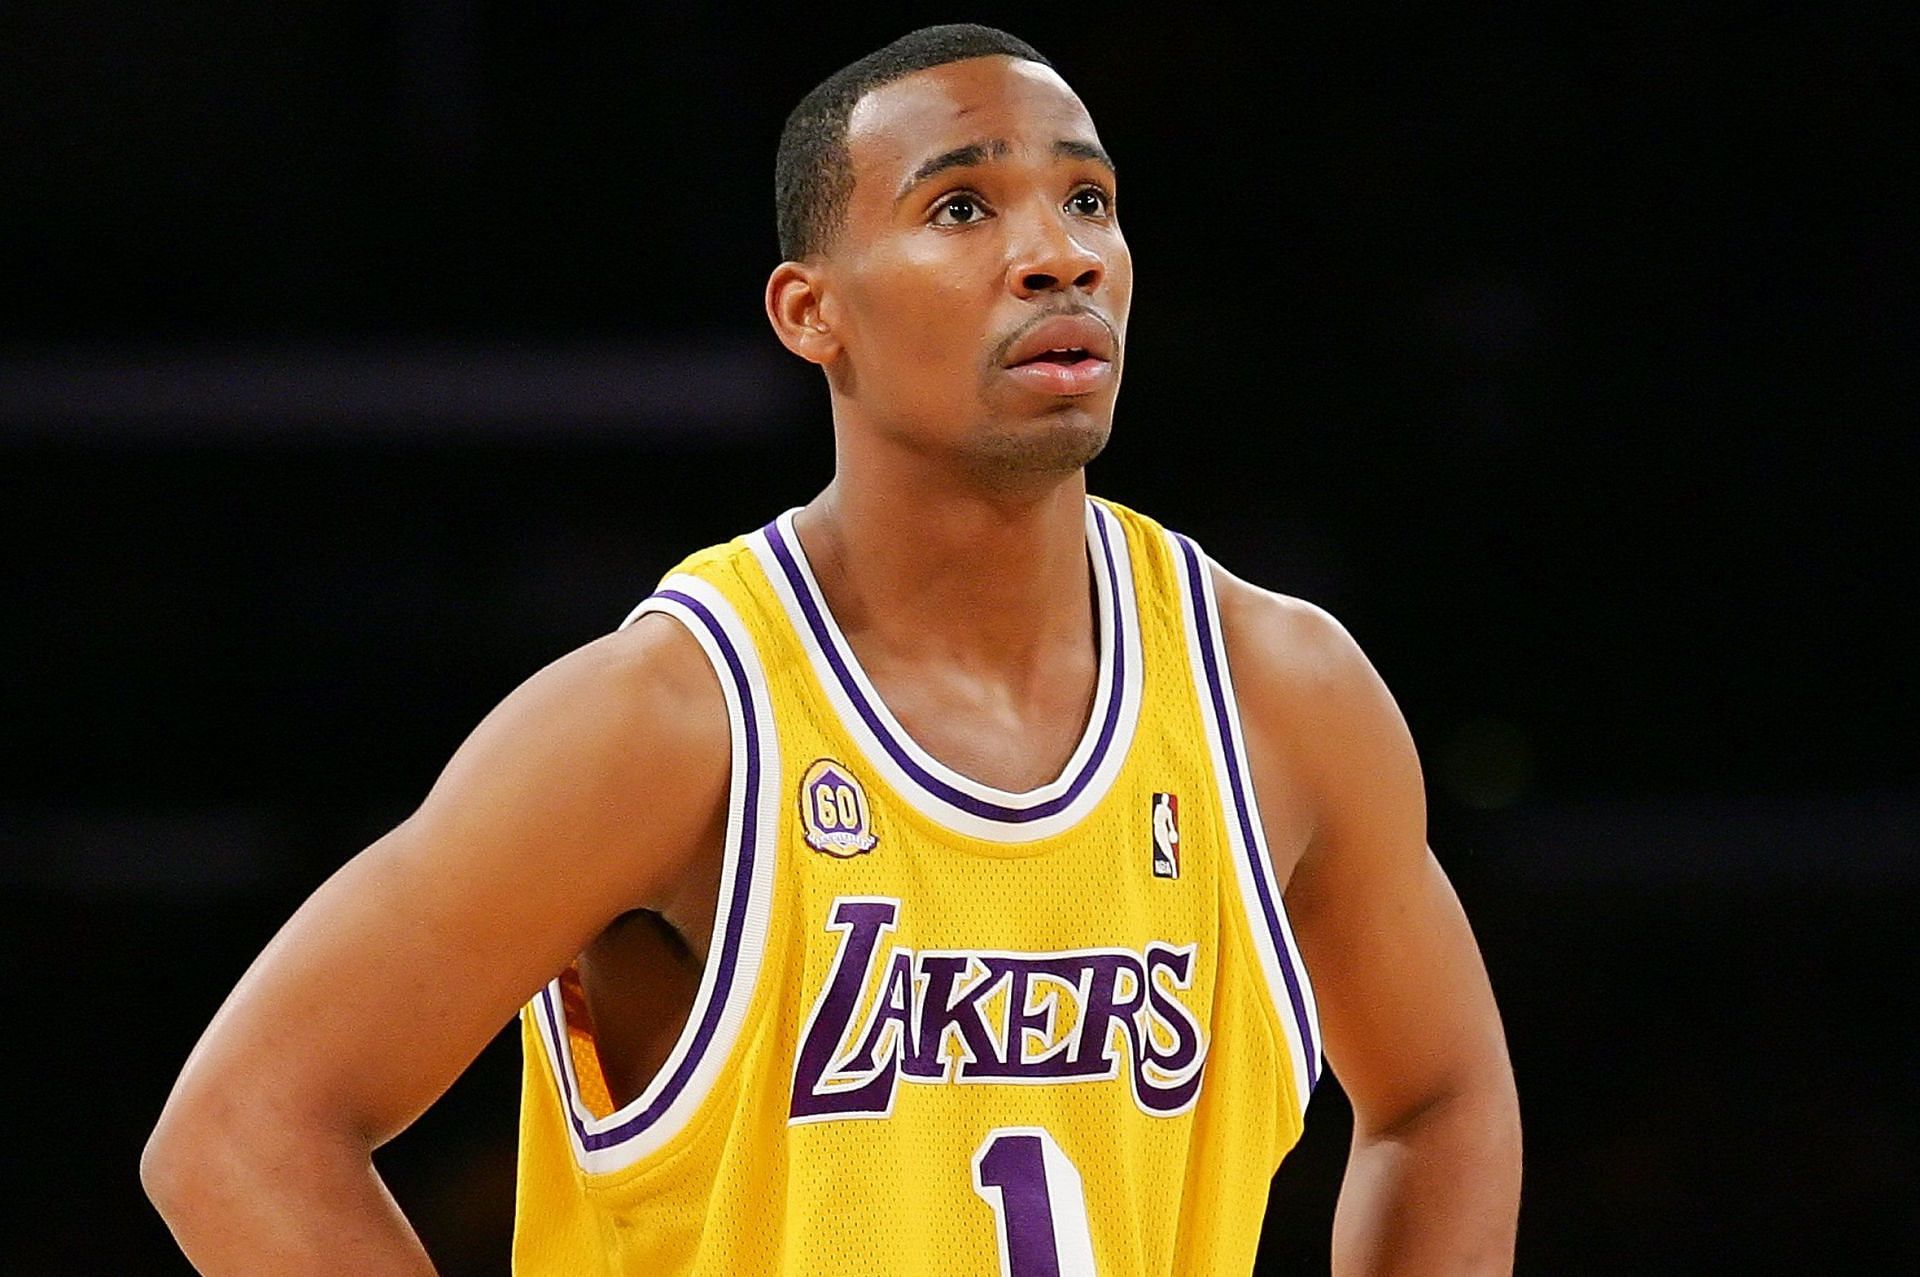 Javaris Crittenton playing for the LA Lakers (Photo: Bleacher Report)